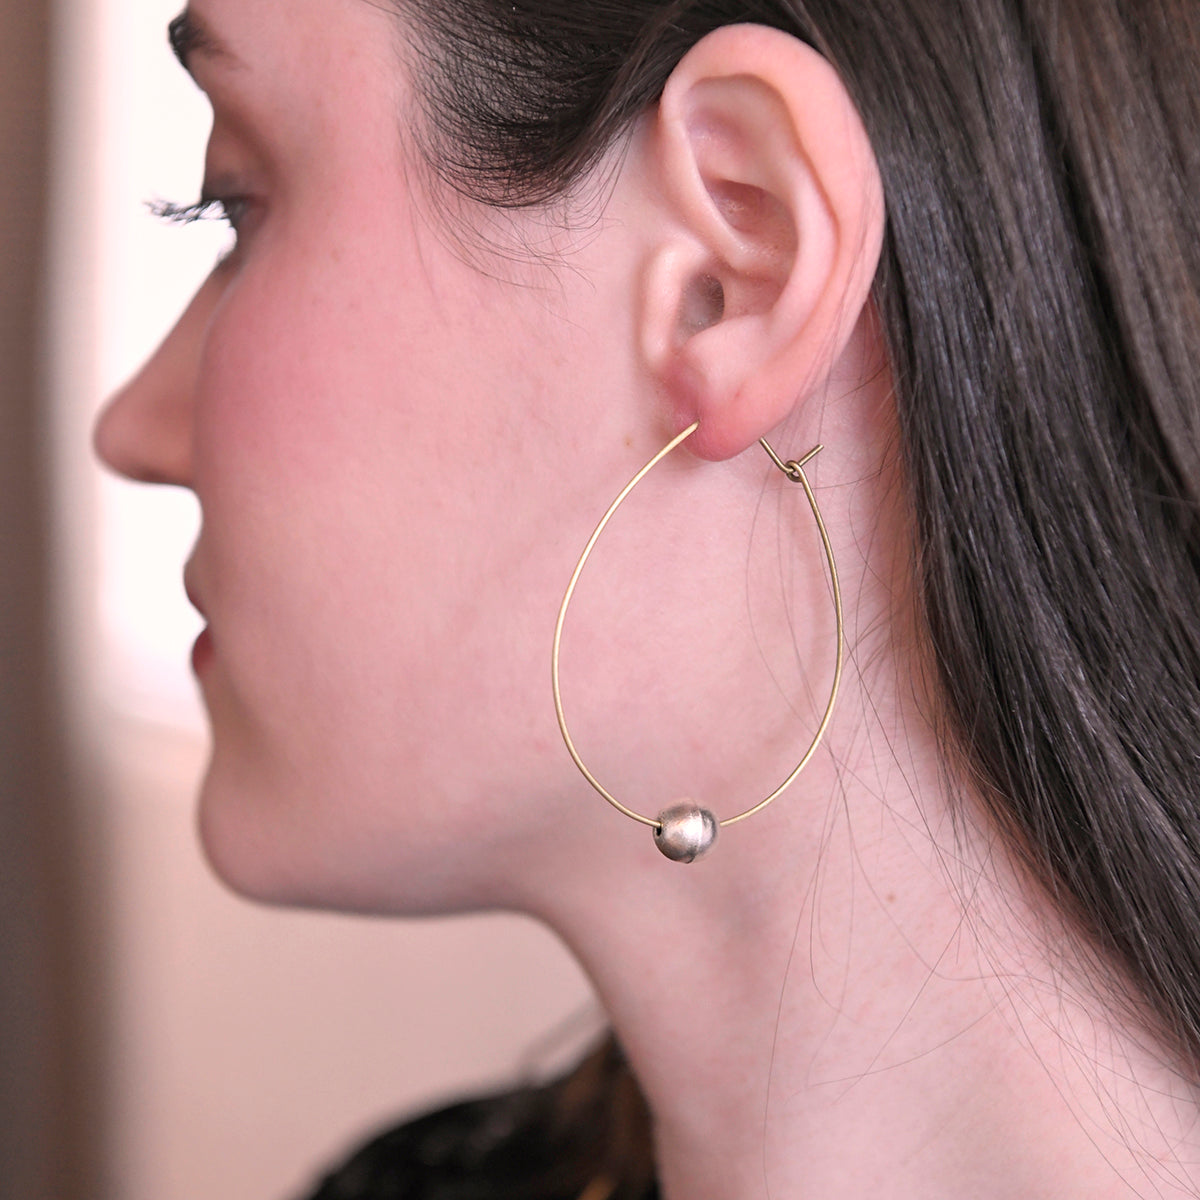 Angelco Accessories Floating pearl hoop earrings  - close up as worn by model